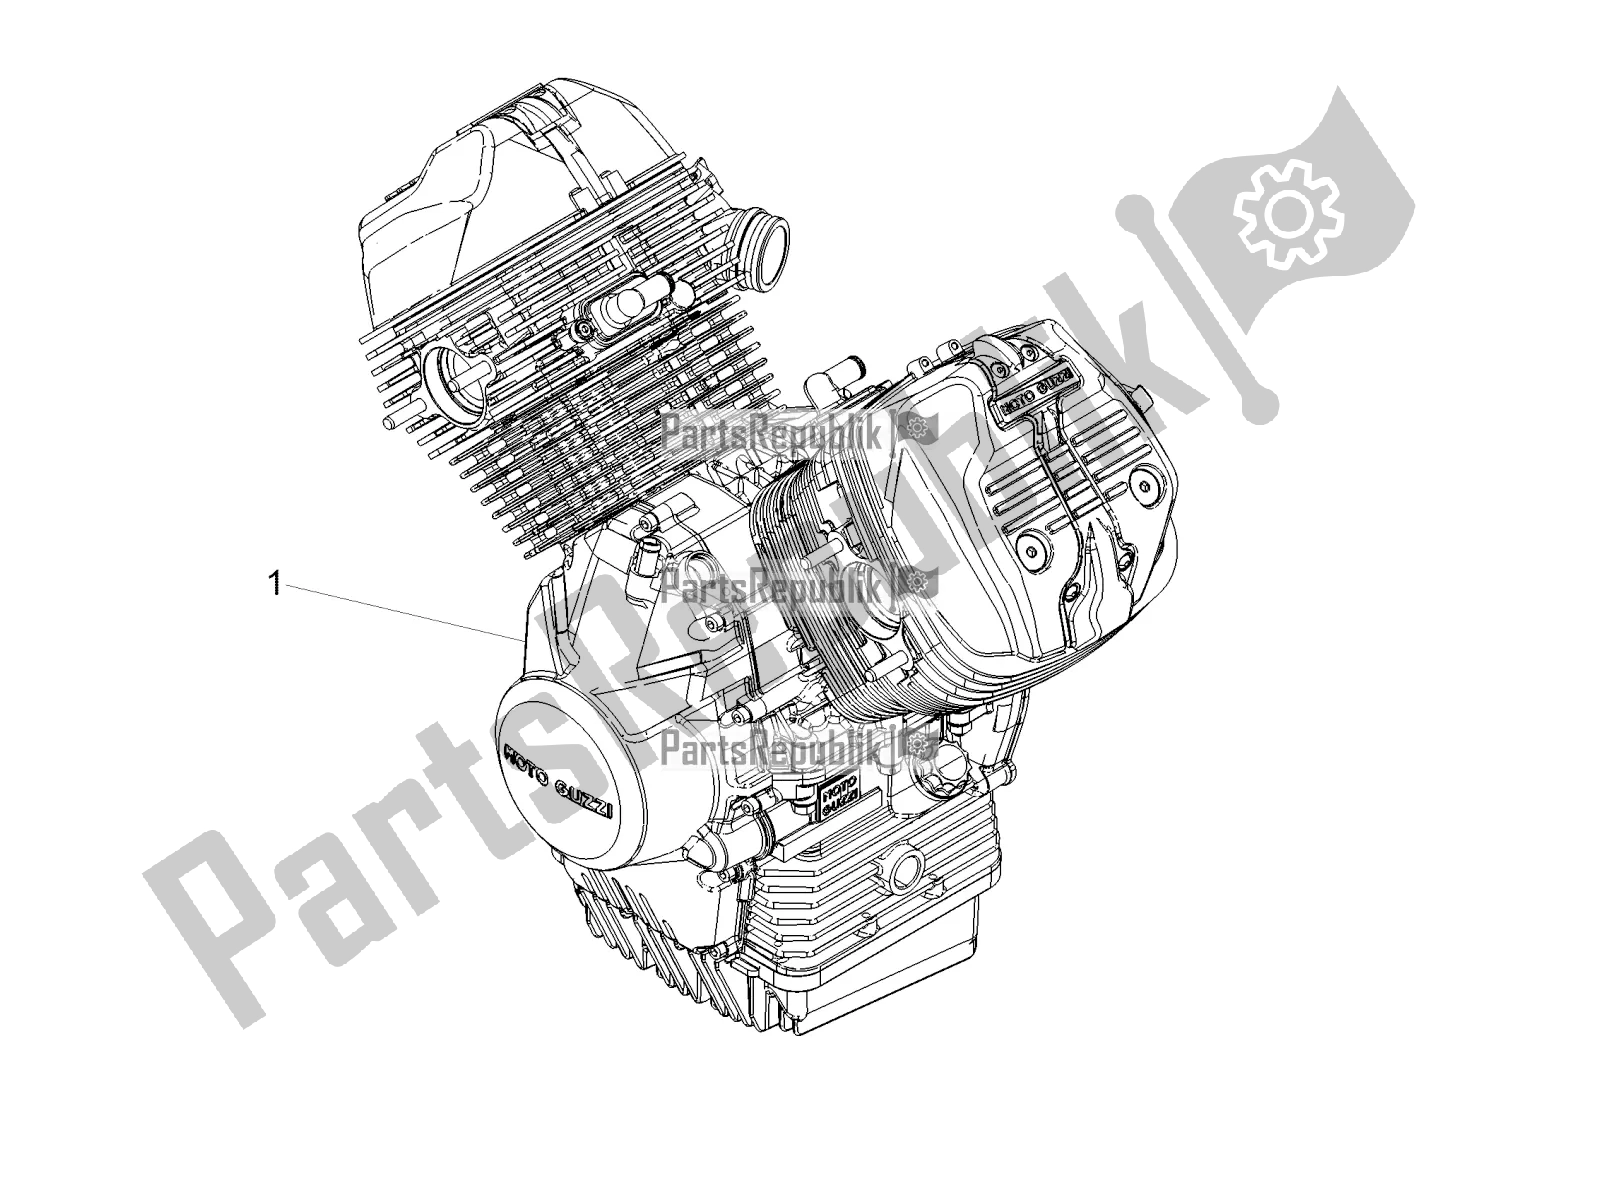 Todas las partes para Palanca Parcial Completa Del Motor de Moto-Guzzi V7 III Stone Night Pack 750 USA 2020